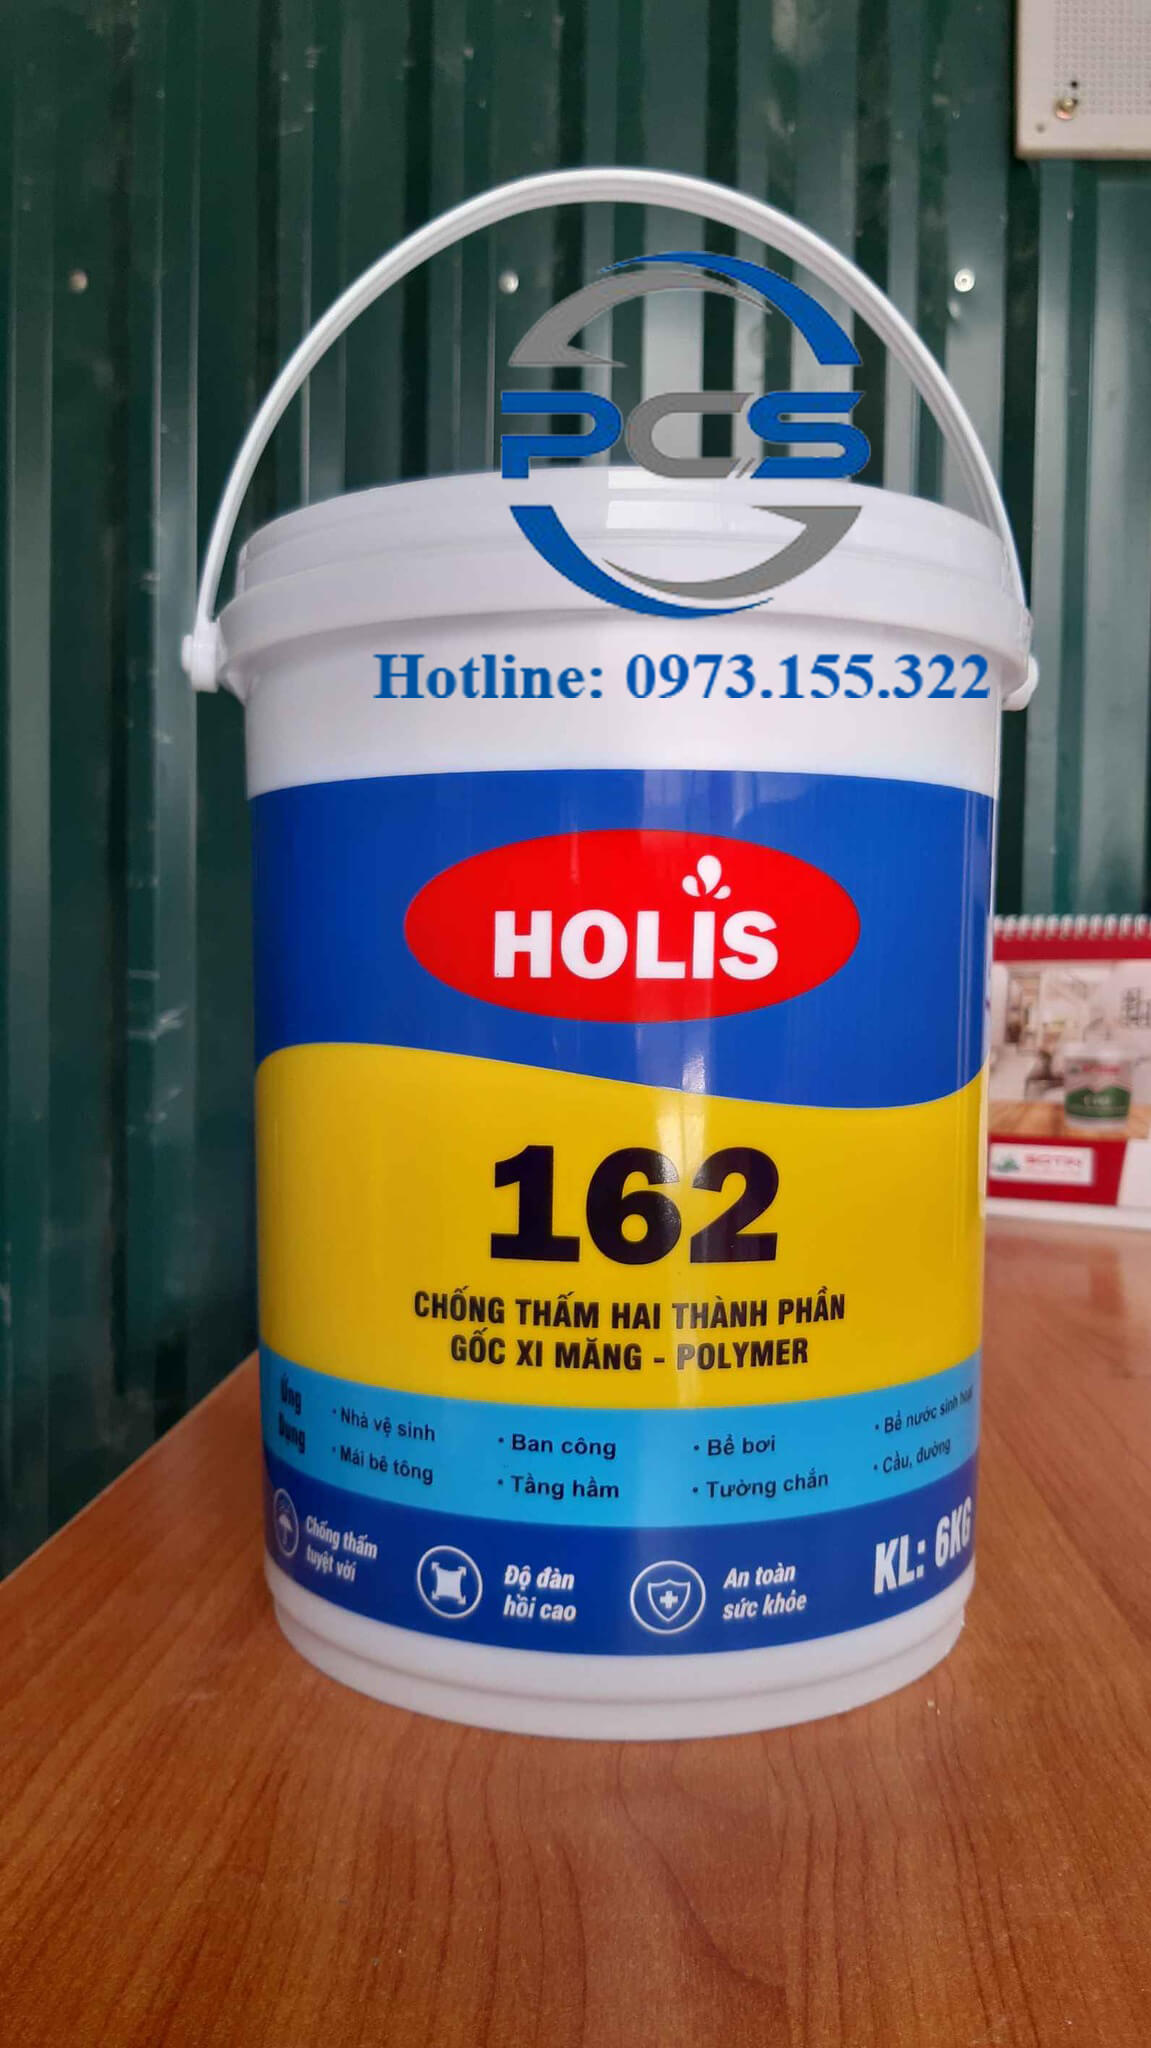 Holis 162